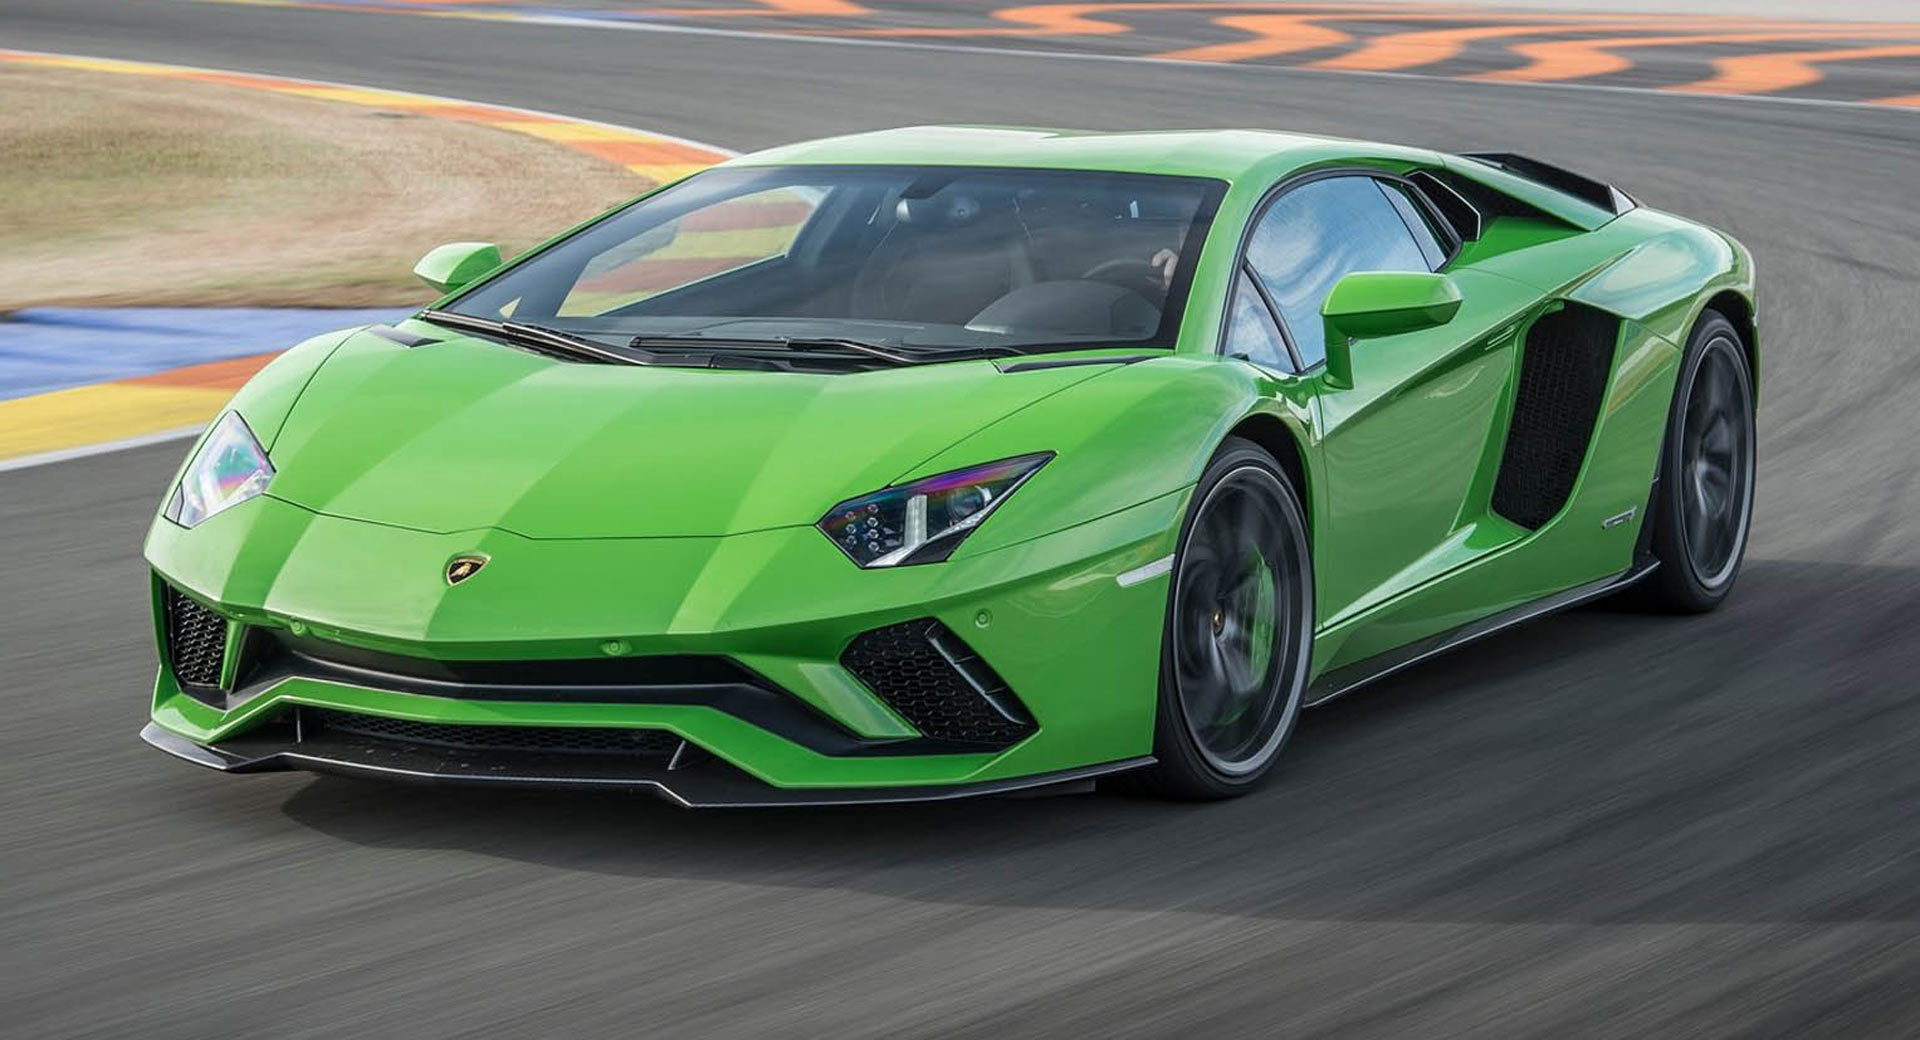 Lamborghini Won’t Launch Undecided Fourth Model Before Mid-2020s ...